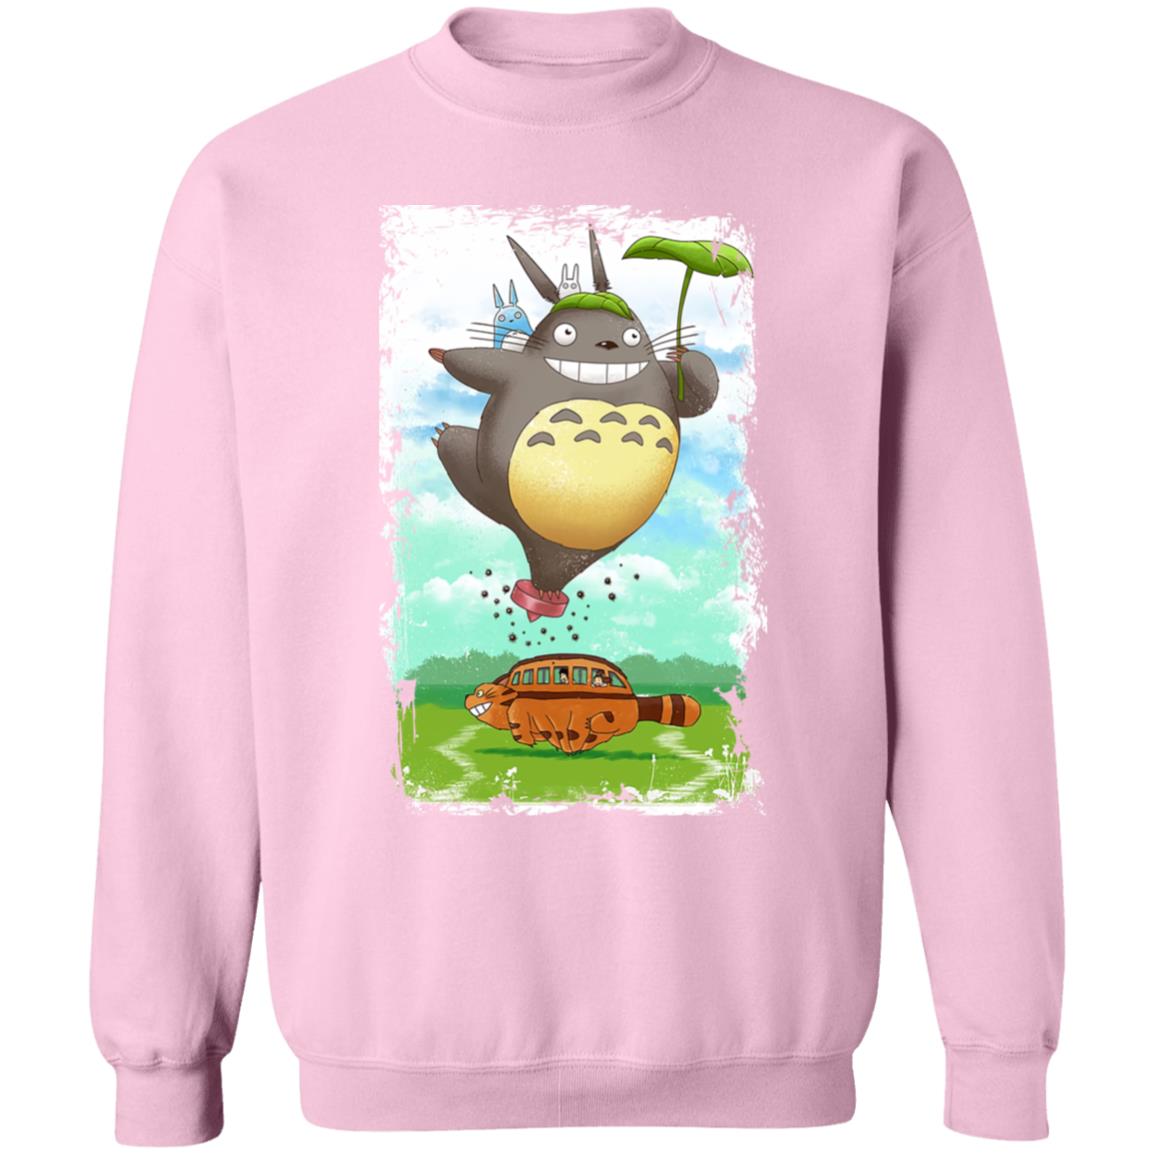 Totoro the Funny Neighbor Sweatshirt Ghibli Store ghibli.store